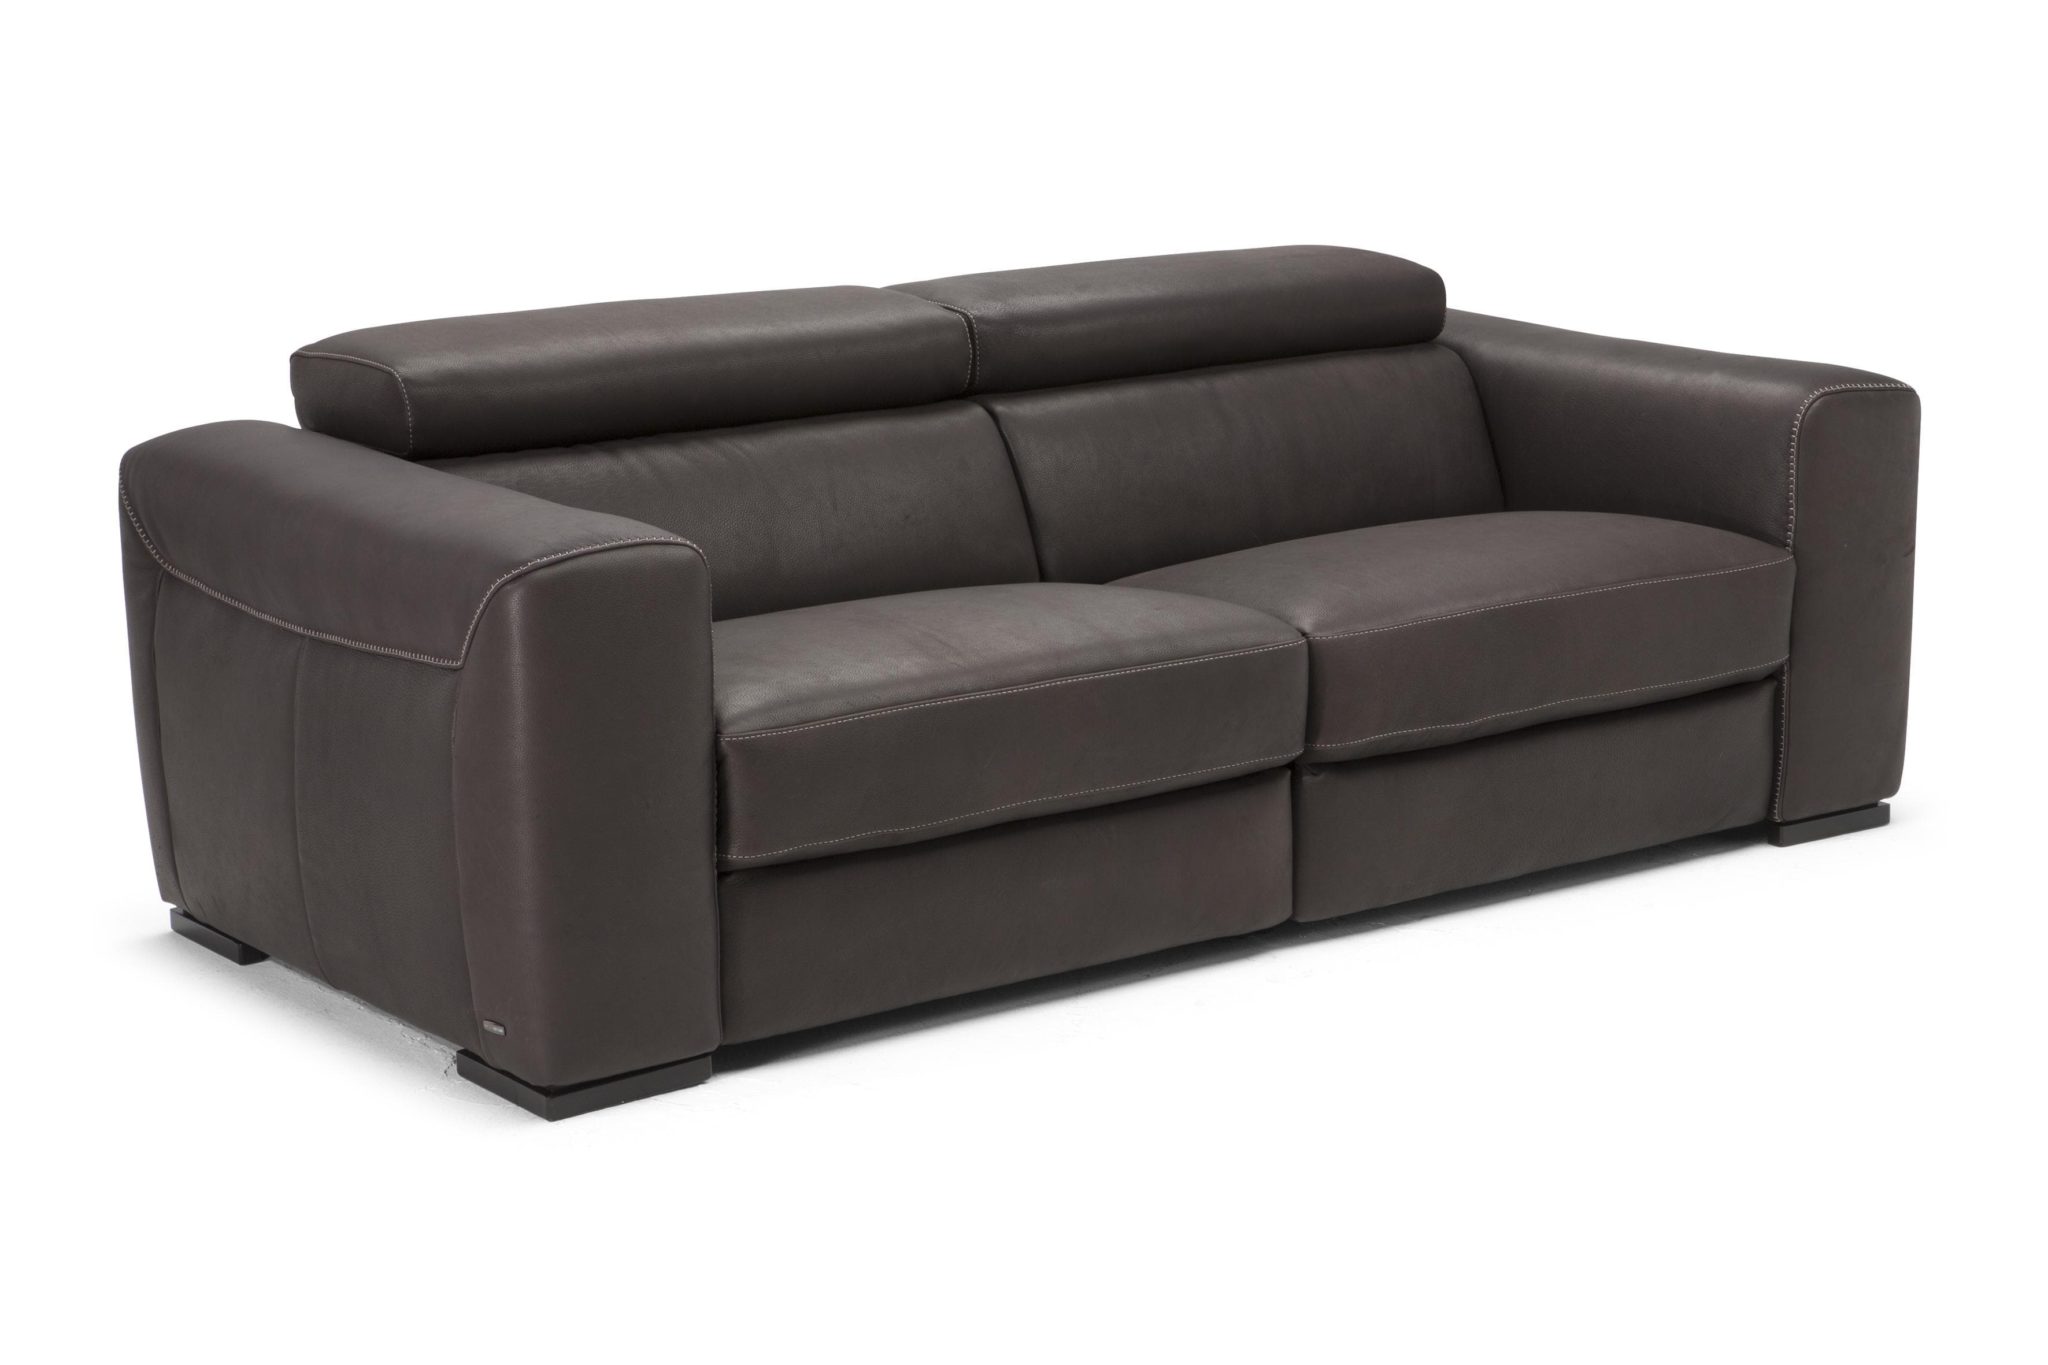 natuzzi sofa bed dimensions